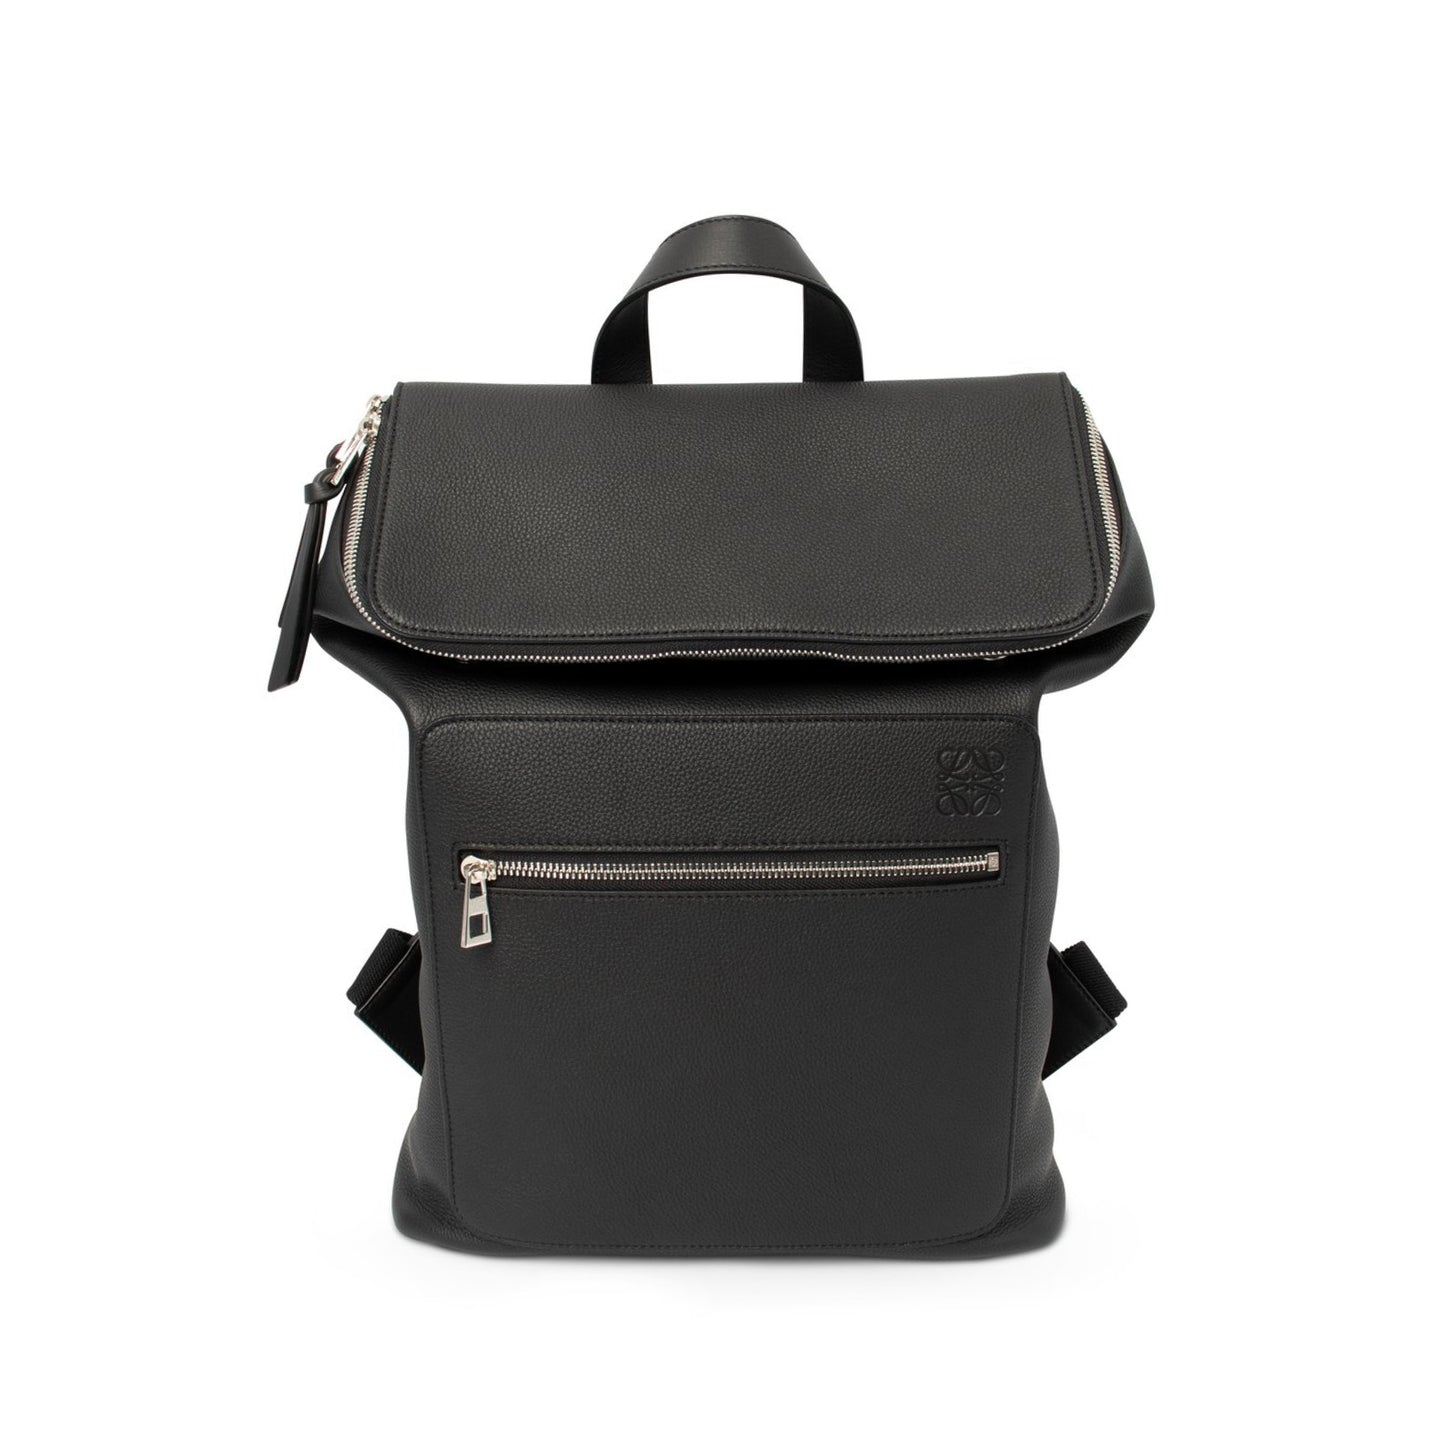 Goya Slim Backpack in Black